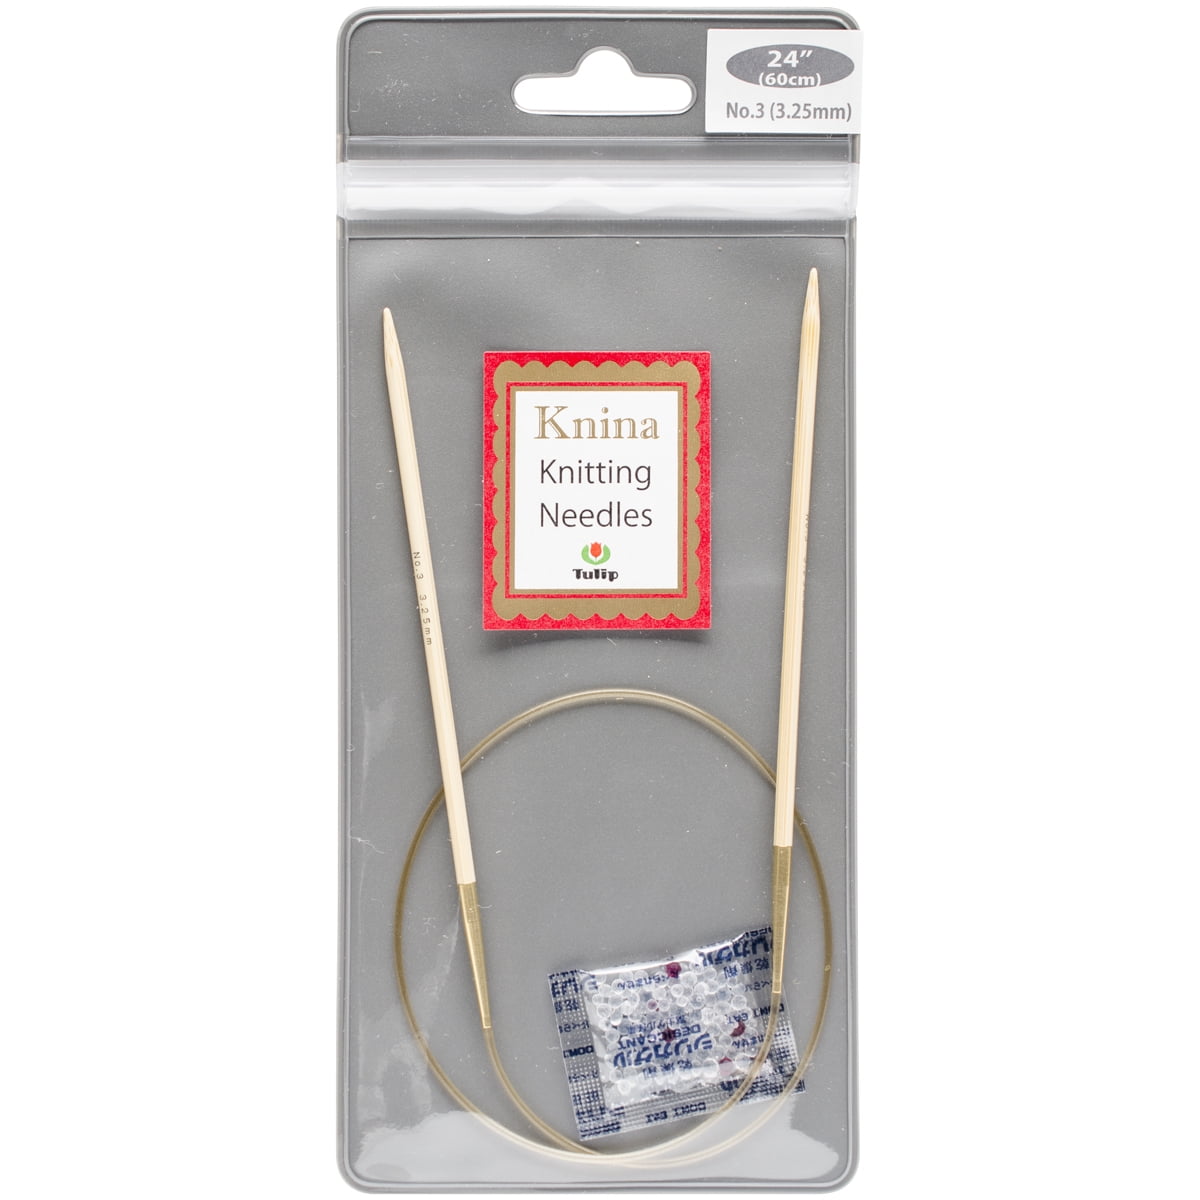 Tulip Knina Knitting Needles 24